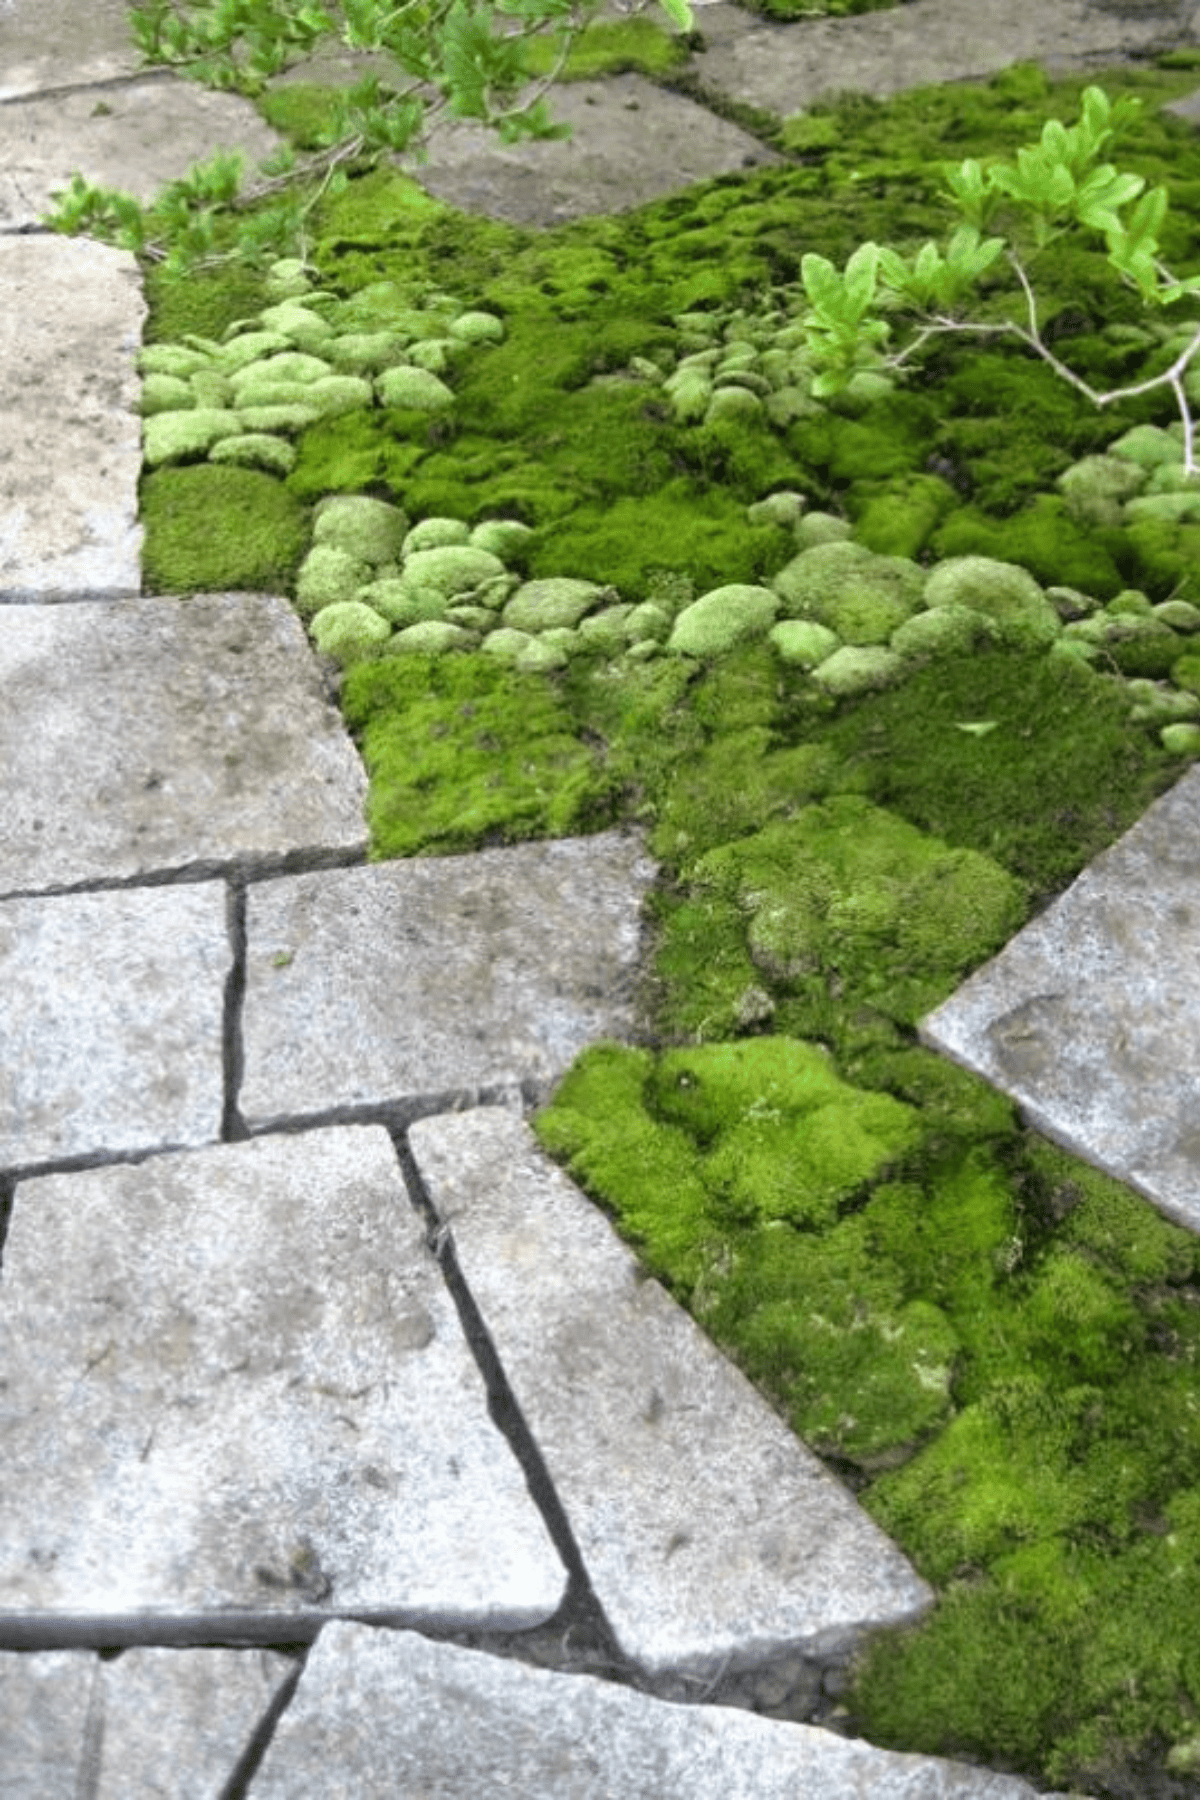 Moss growing on a stone walkway in a garden.